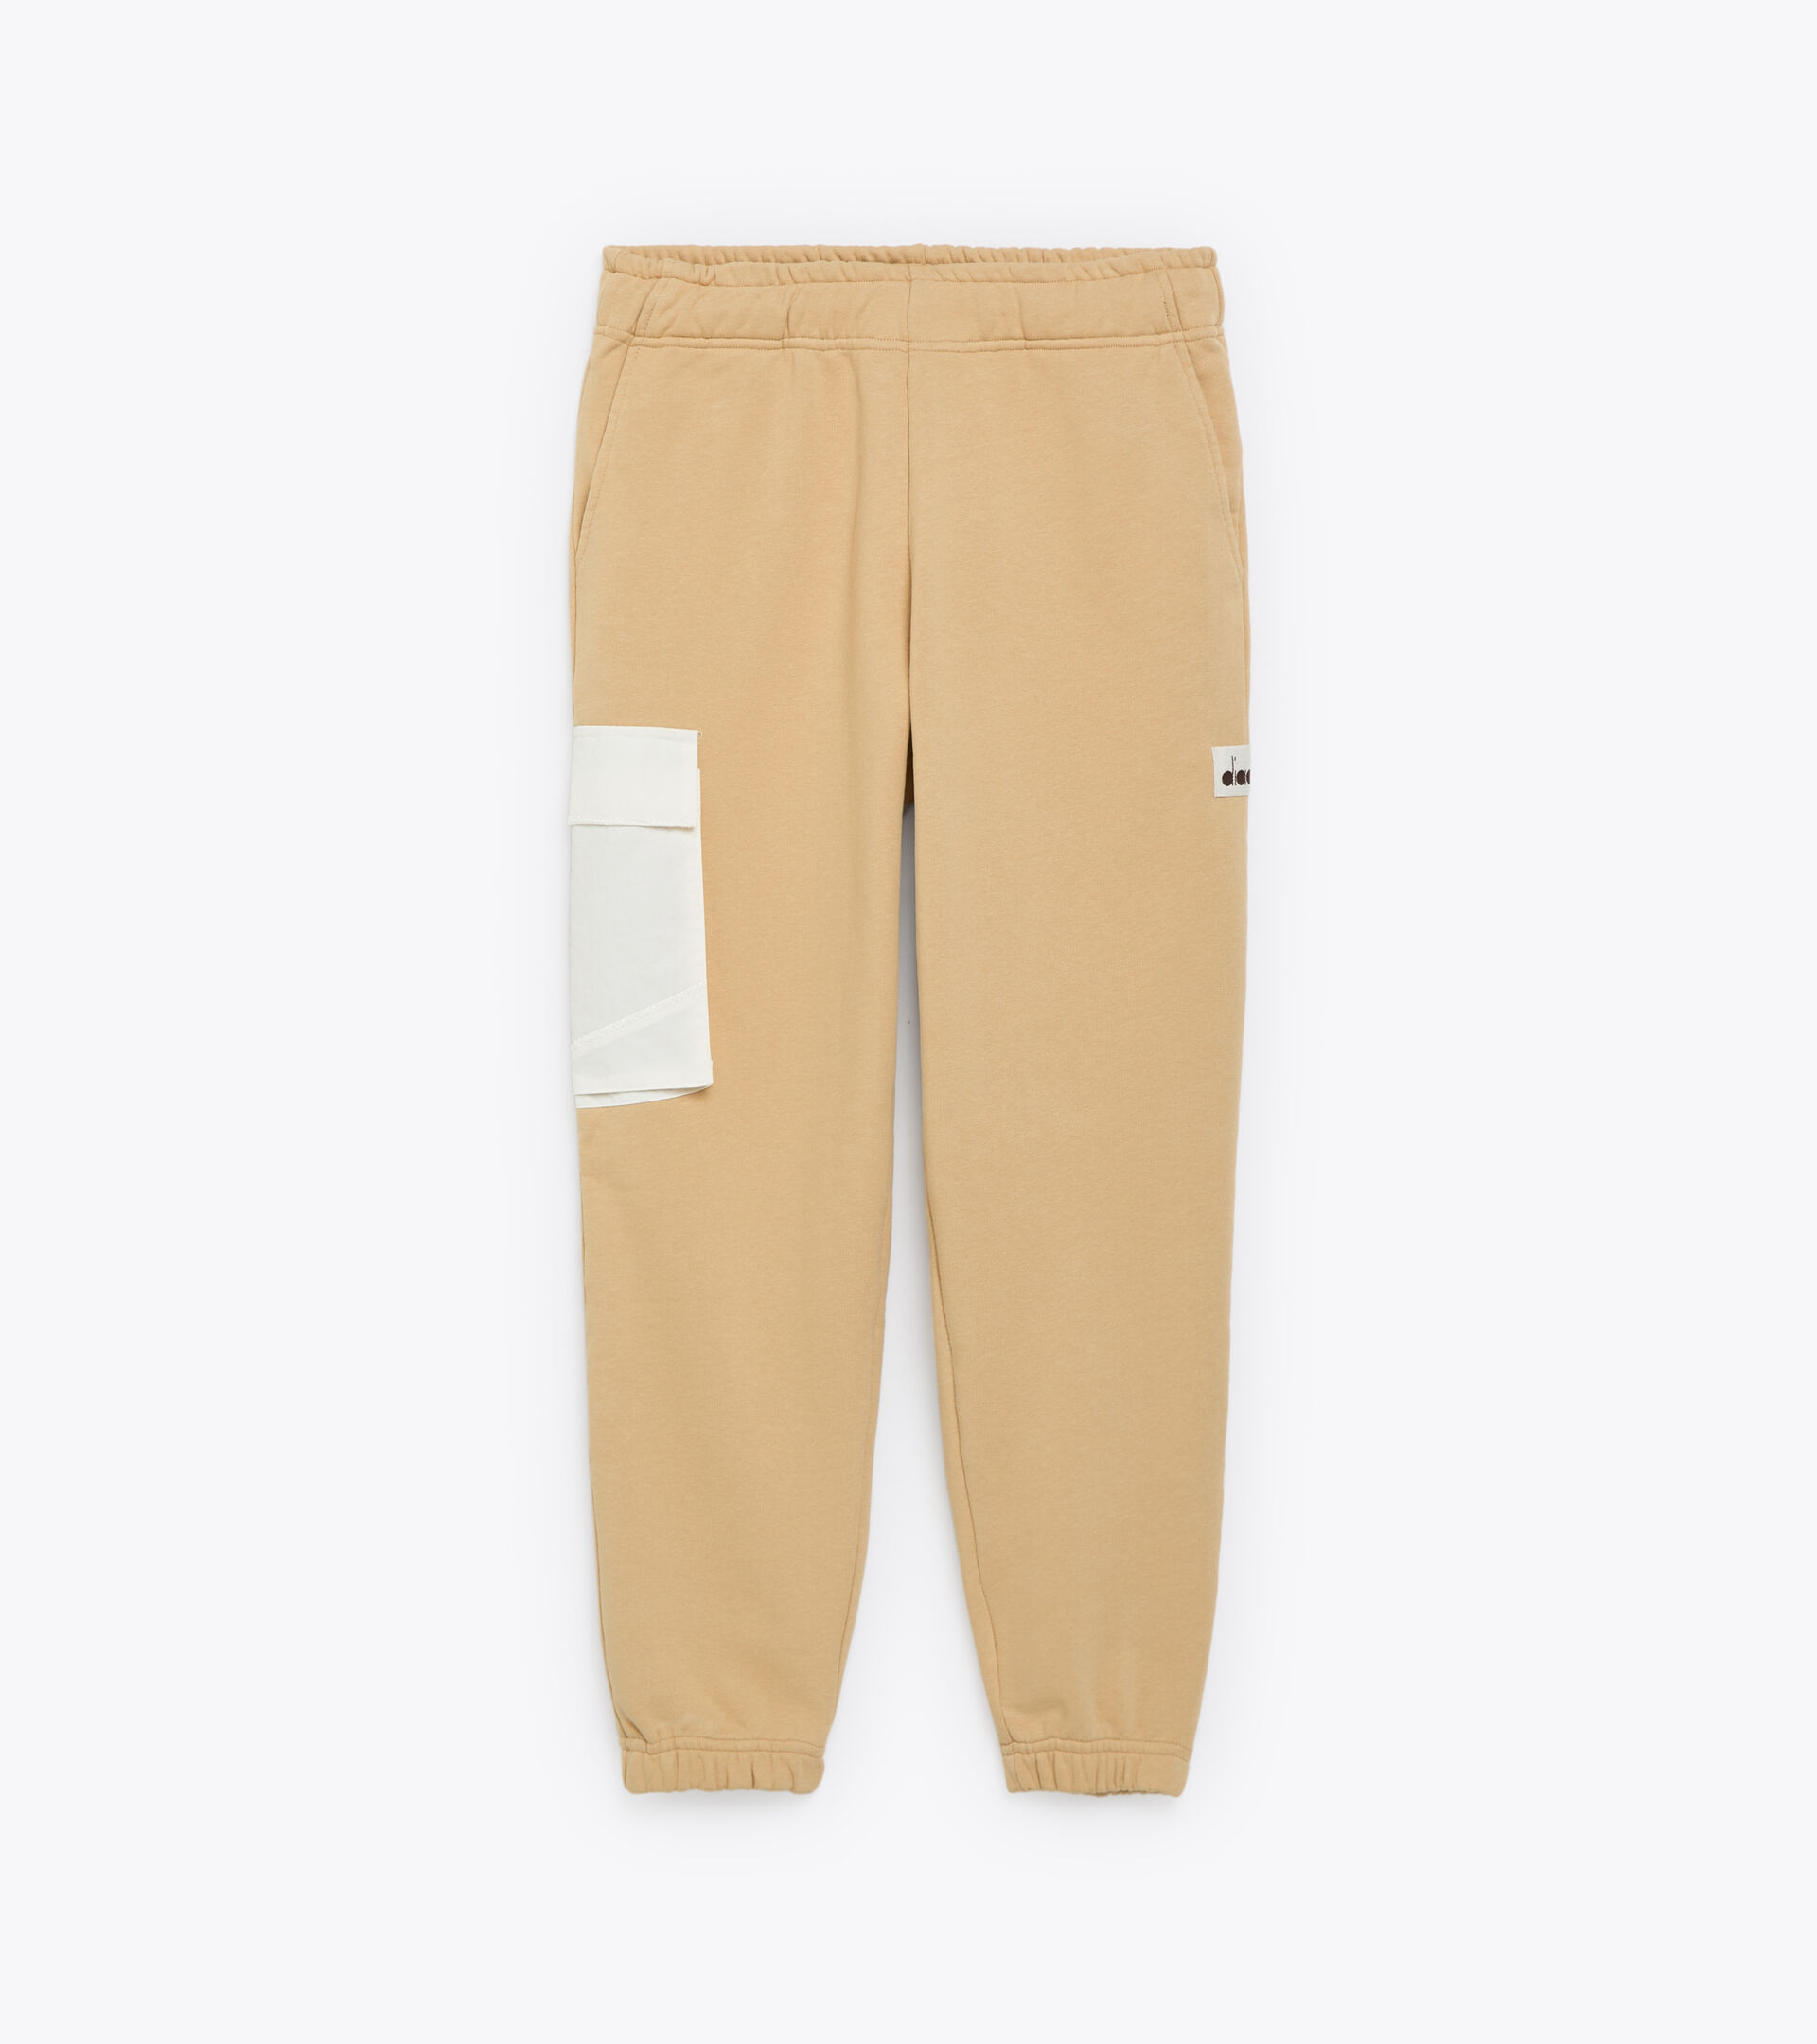 Made in Italy sweatpants - Men  PANT 2030 WARM SAND - Diadora